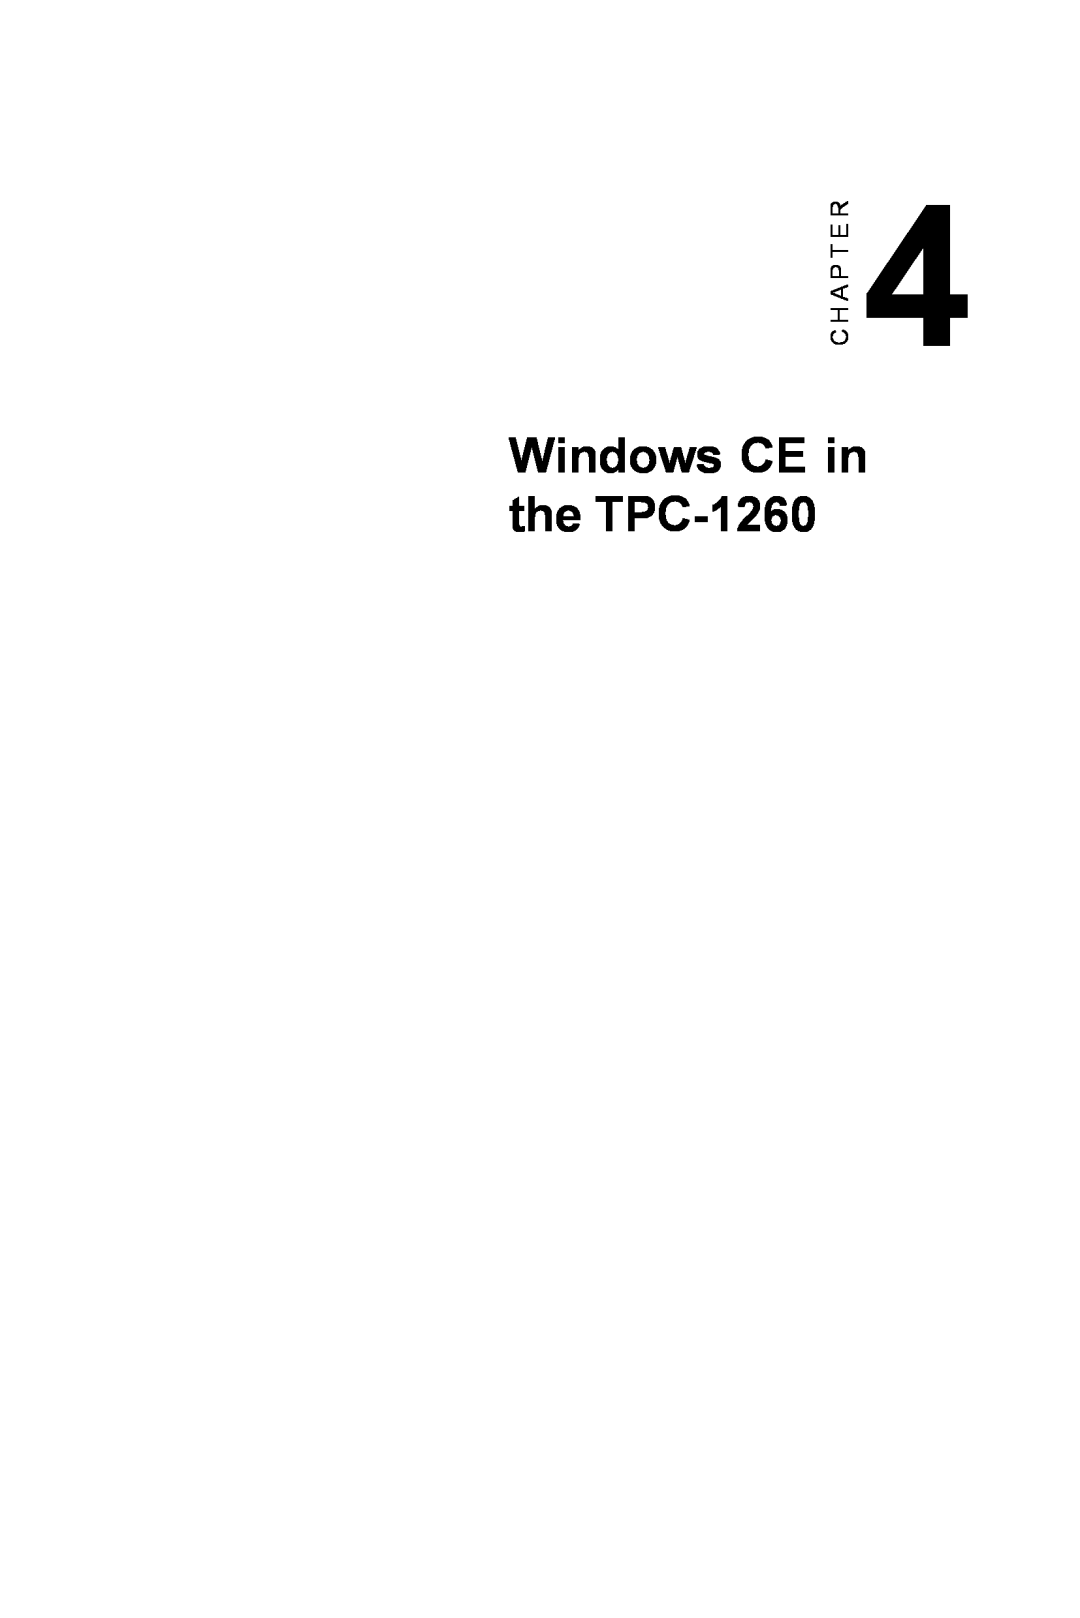 Advantech manual Windows CE in the TPC-1260, C H A P T E R 